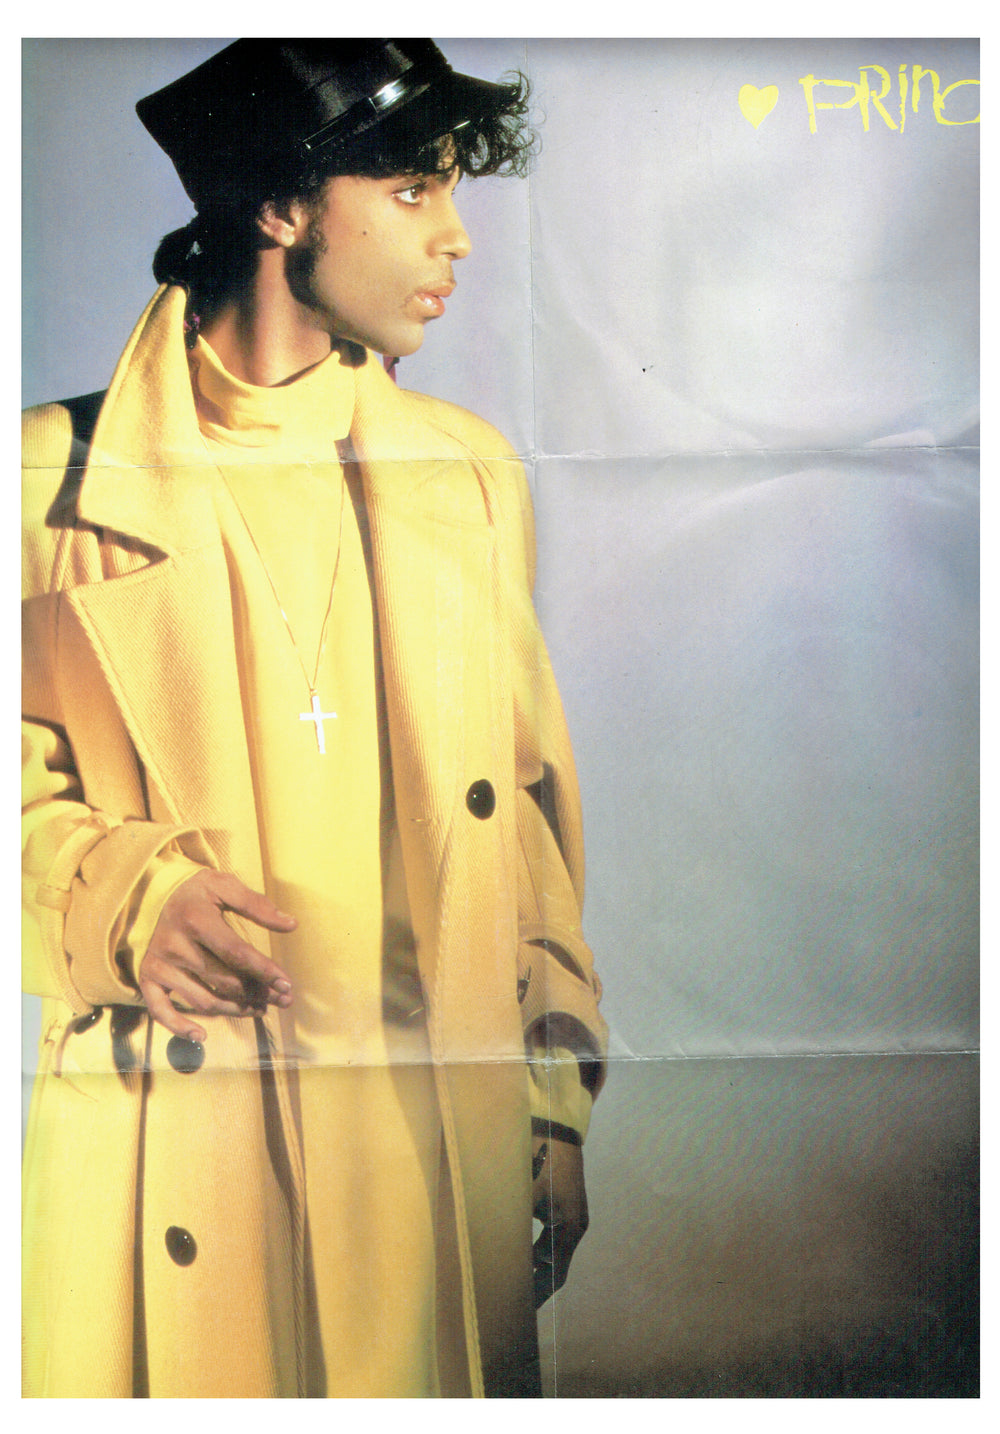 Prince If I Was Your Girlfriend UK 7 Inch Vinyl 1987 Original Poster Bag